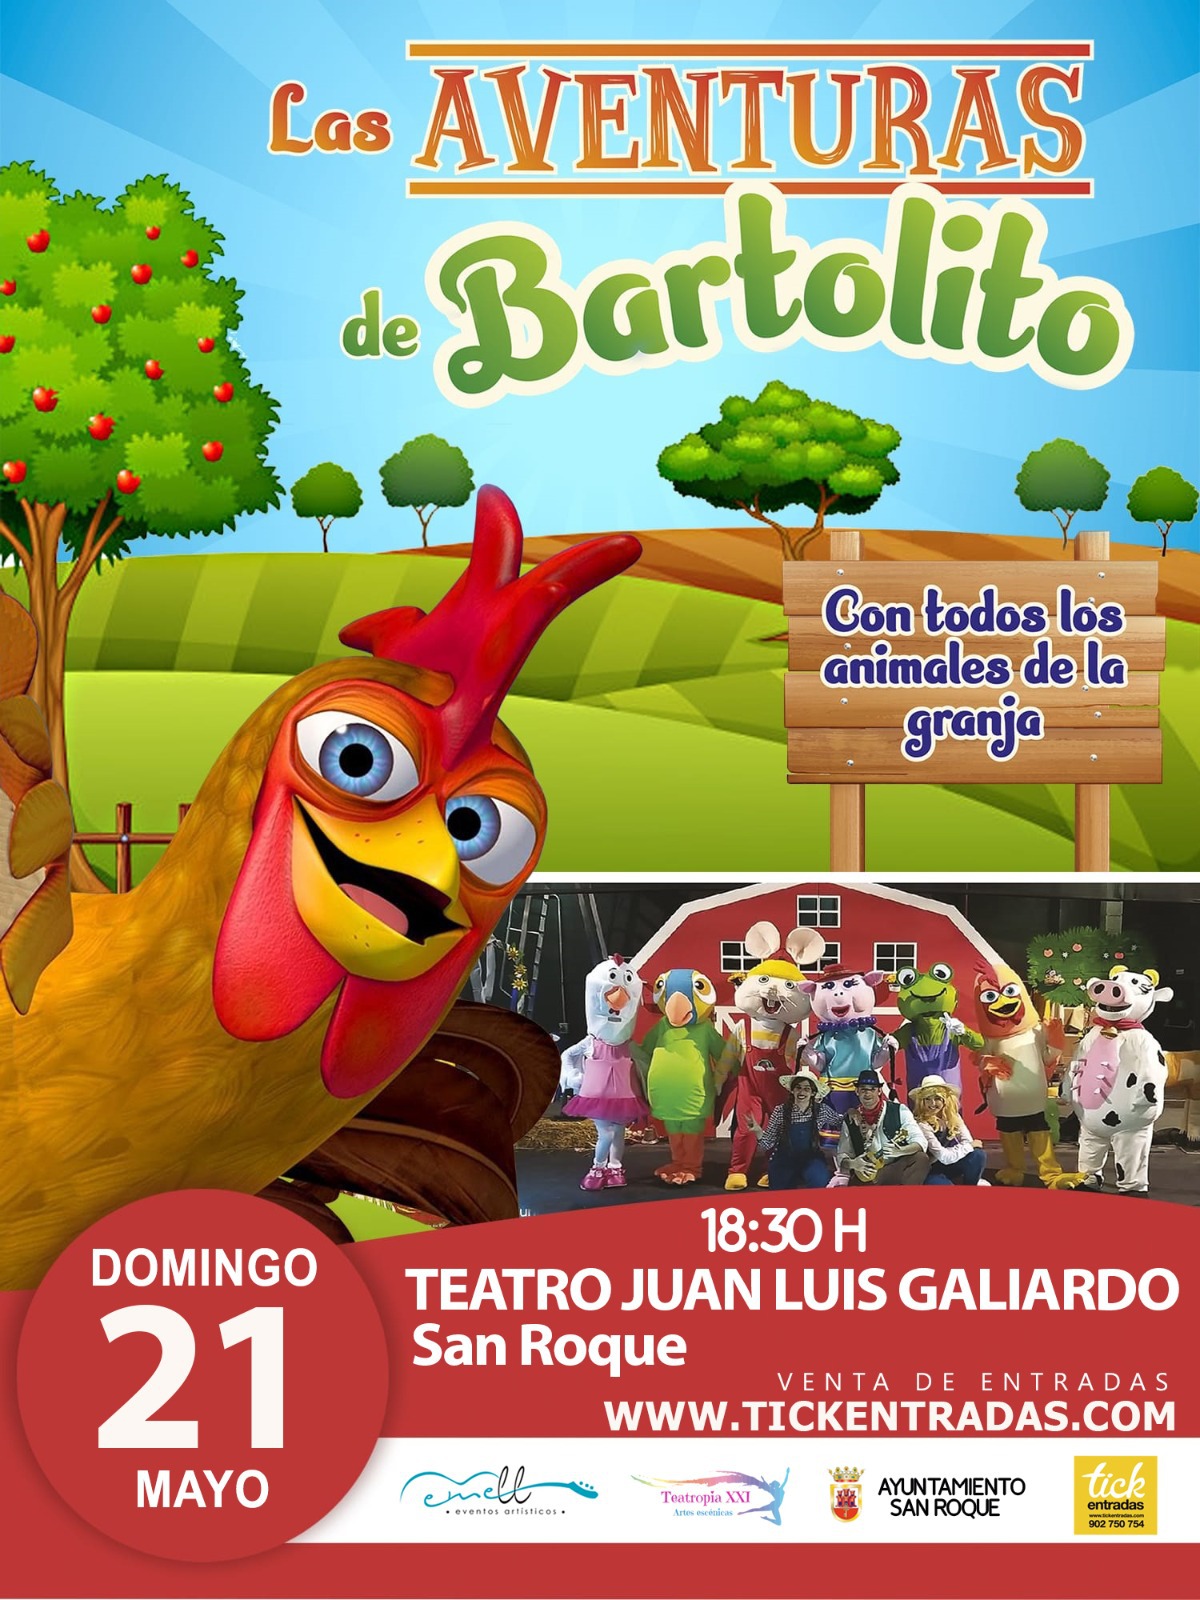 El Gallo Bartolito - Apps on Google Play